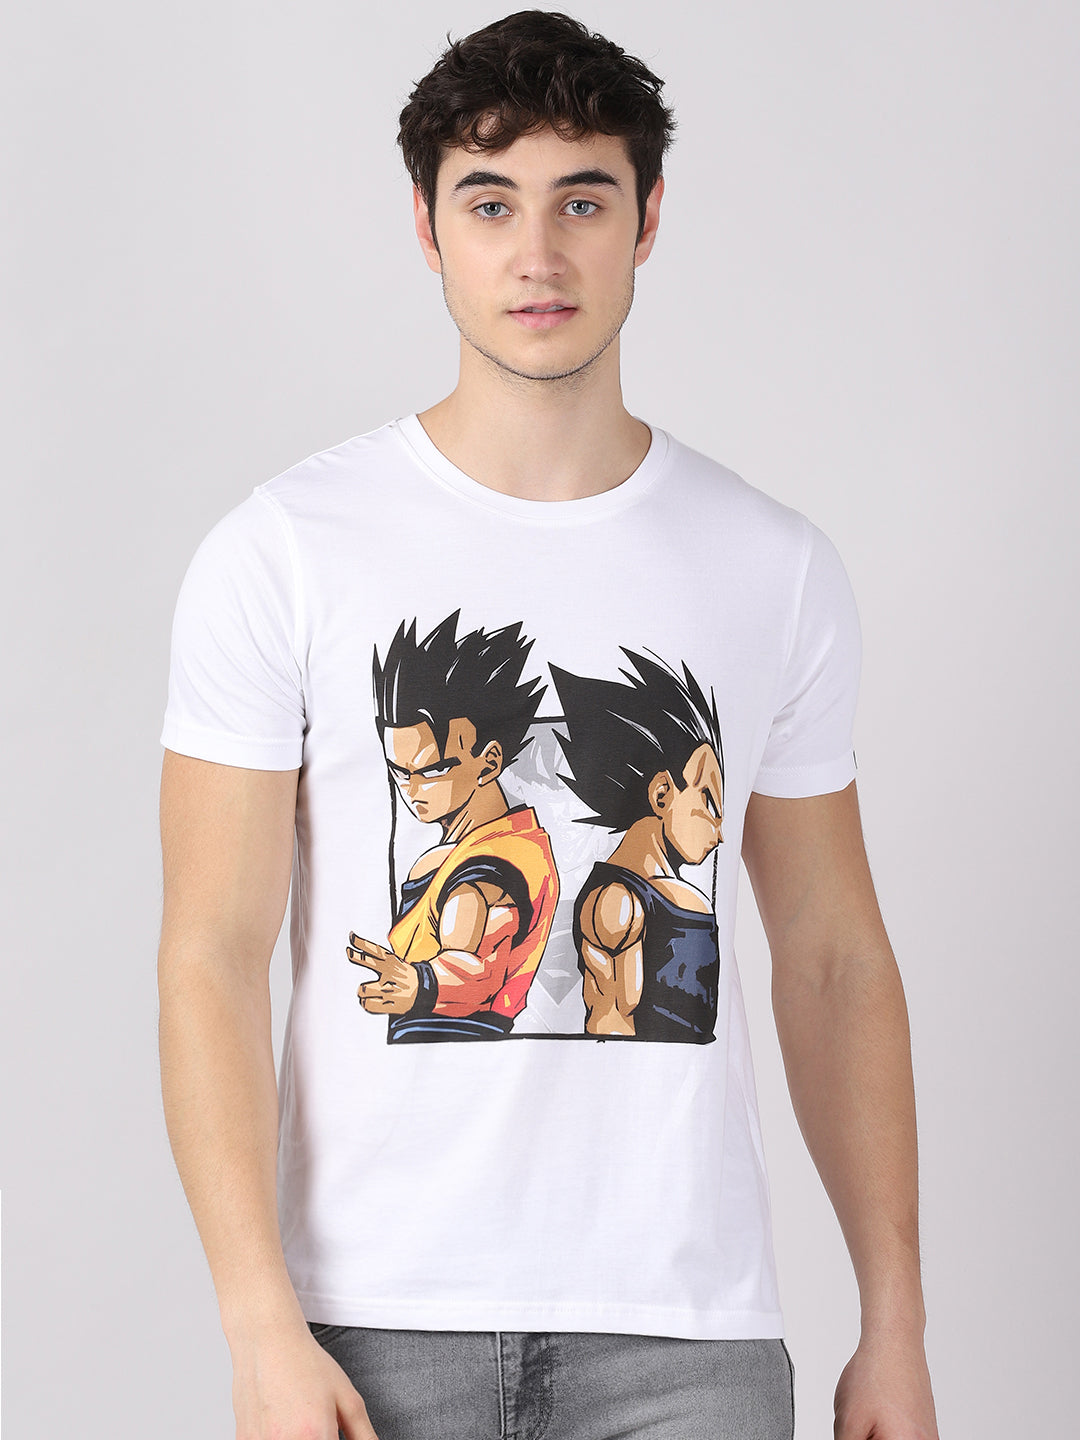 Vegeta Dragon Ball Z DBZ Compression T-Shirt Muscle Shirt Super